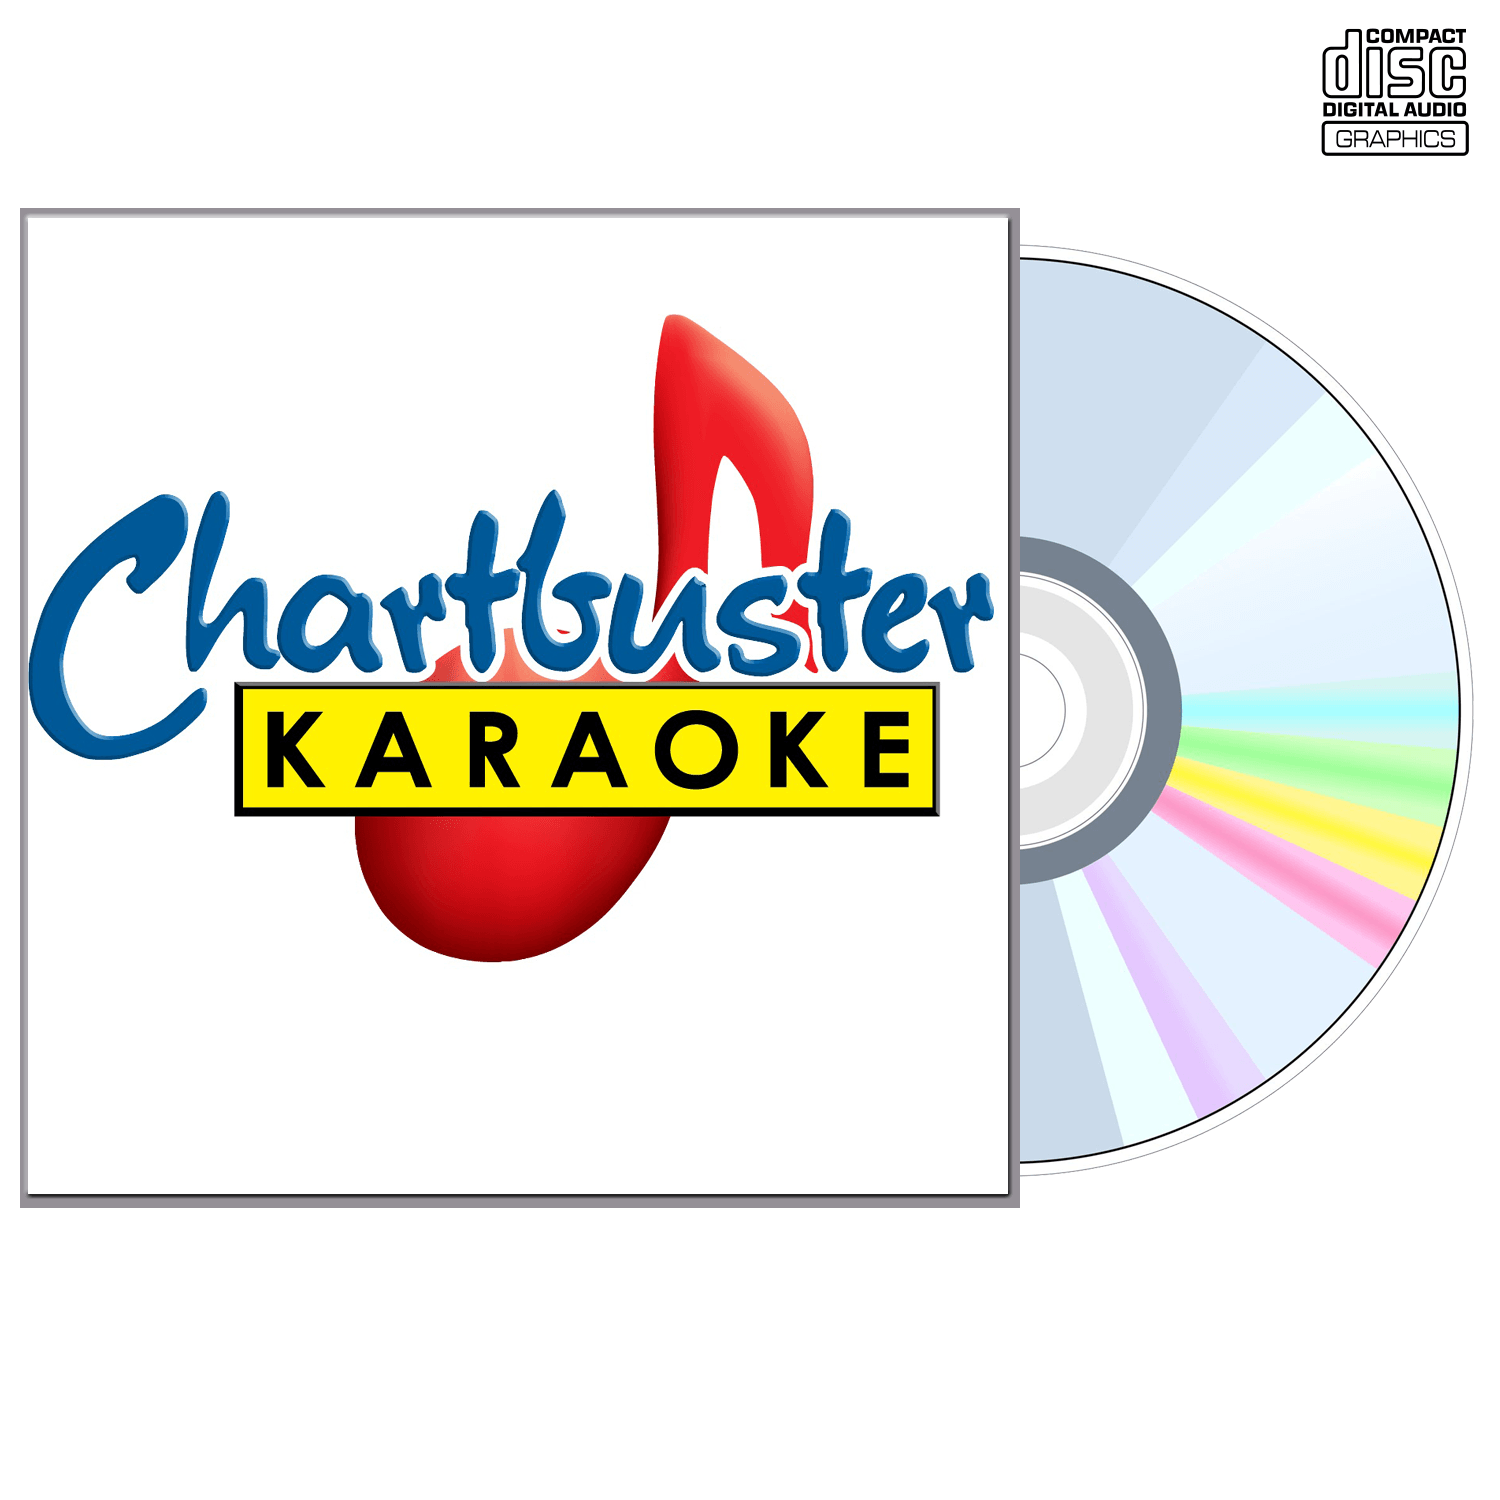 Country Collection Vol 2 - CD+G - Chartbuster Karaoke - Karaoke Home Entertainment